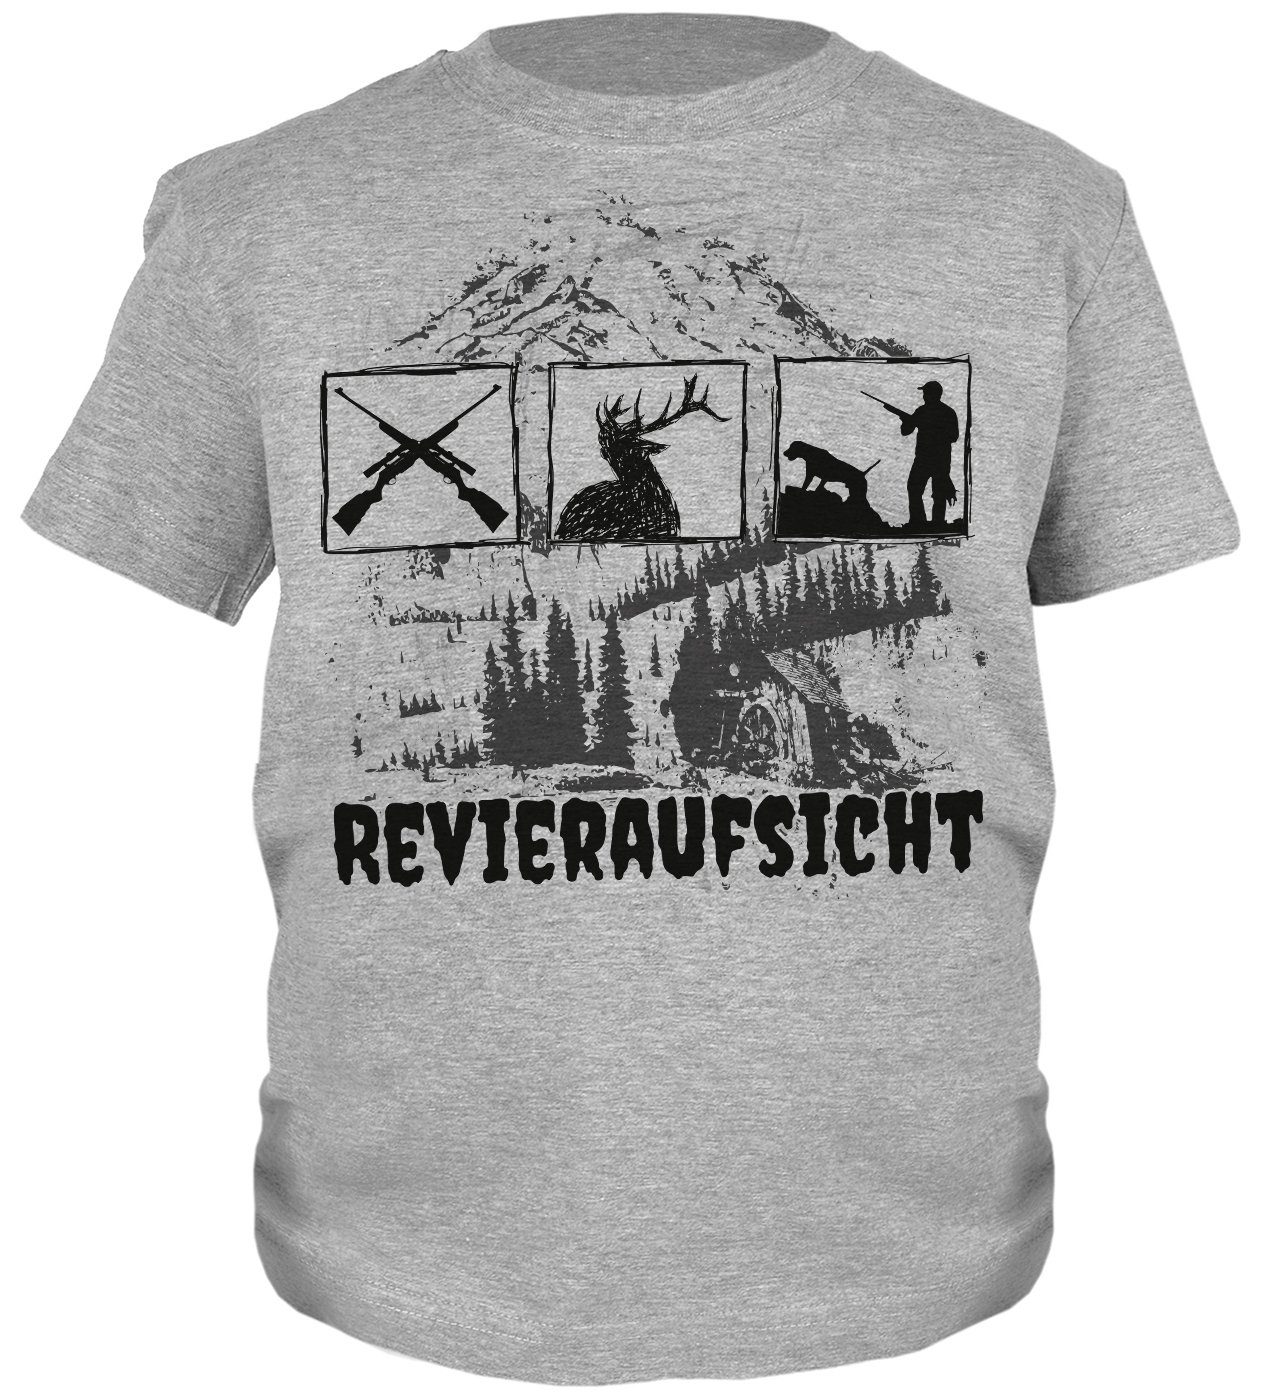 T-Shirt Revieraufsicht - : Shirt Kinder Tini Hirsch Shirts Kind Jagdmotiv Jäger